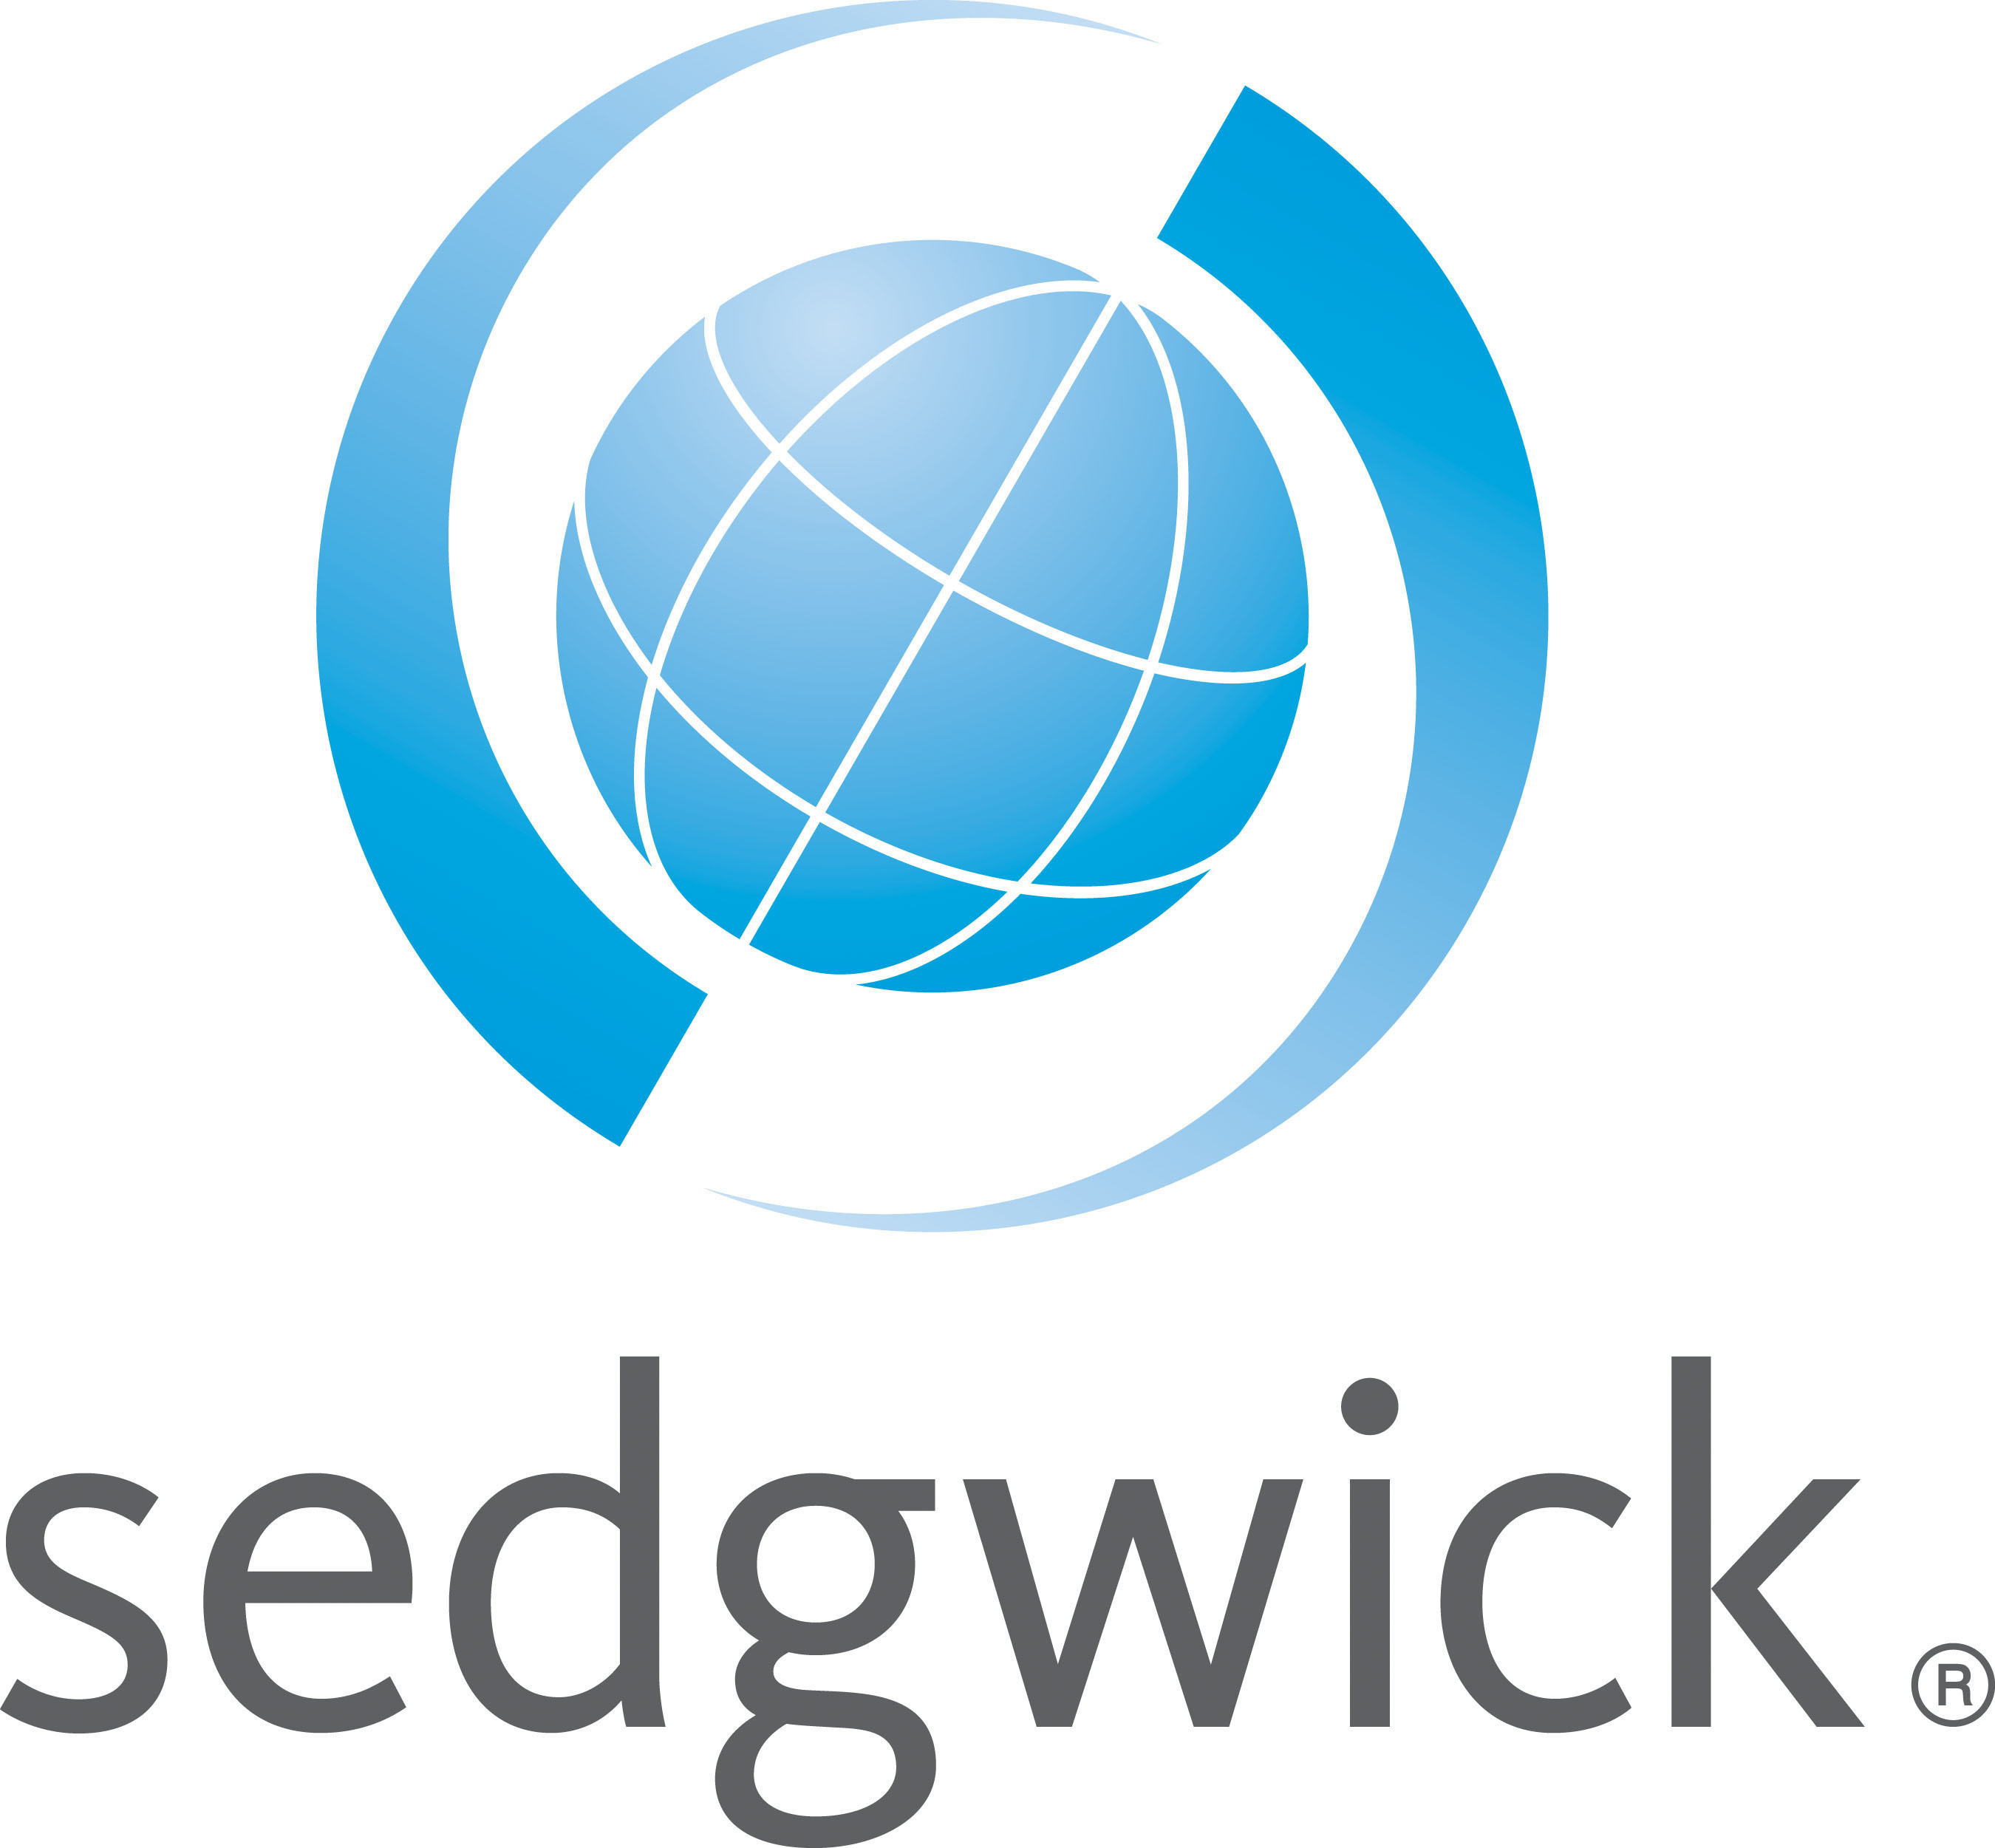 Sedgwick Logo. (PRNewsFoto/Sedgwick) (PRNewsFoto/) (PRNewsFoto/)